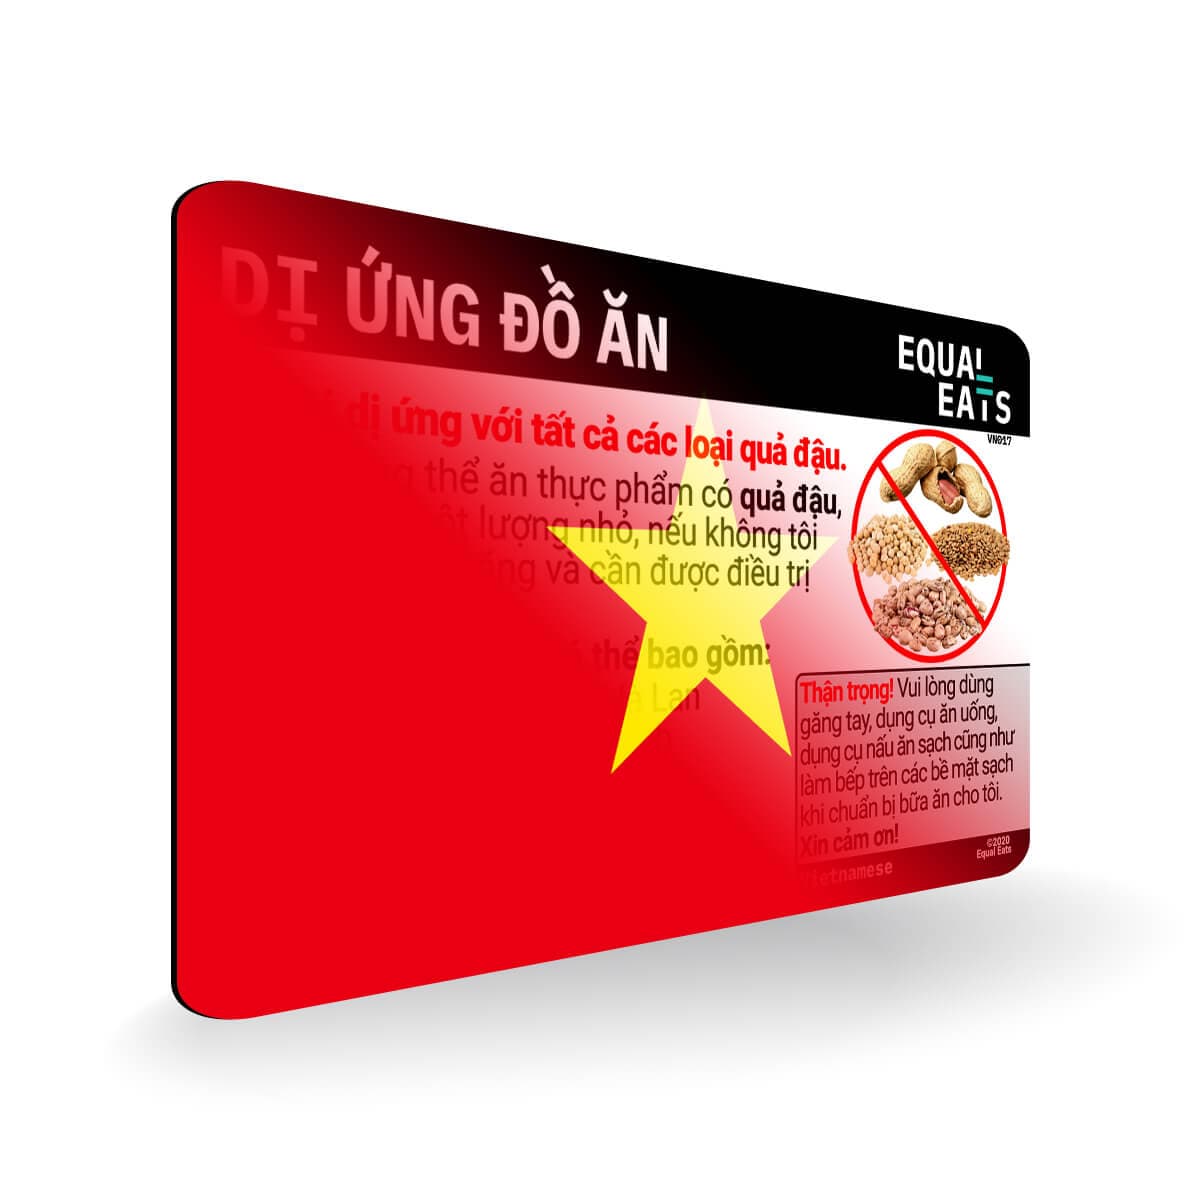 Legume Allergy in Vietnamese. Legume Allergy Card for Vietnam